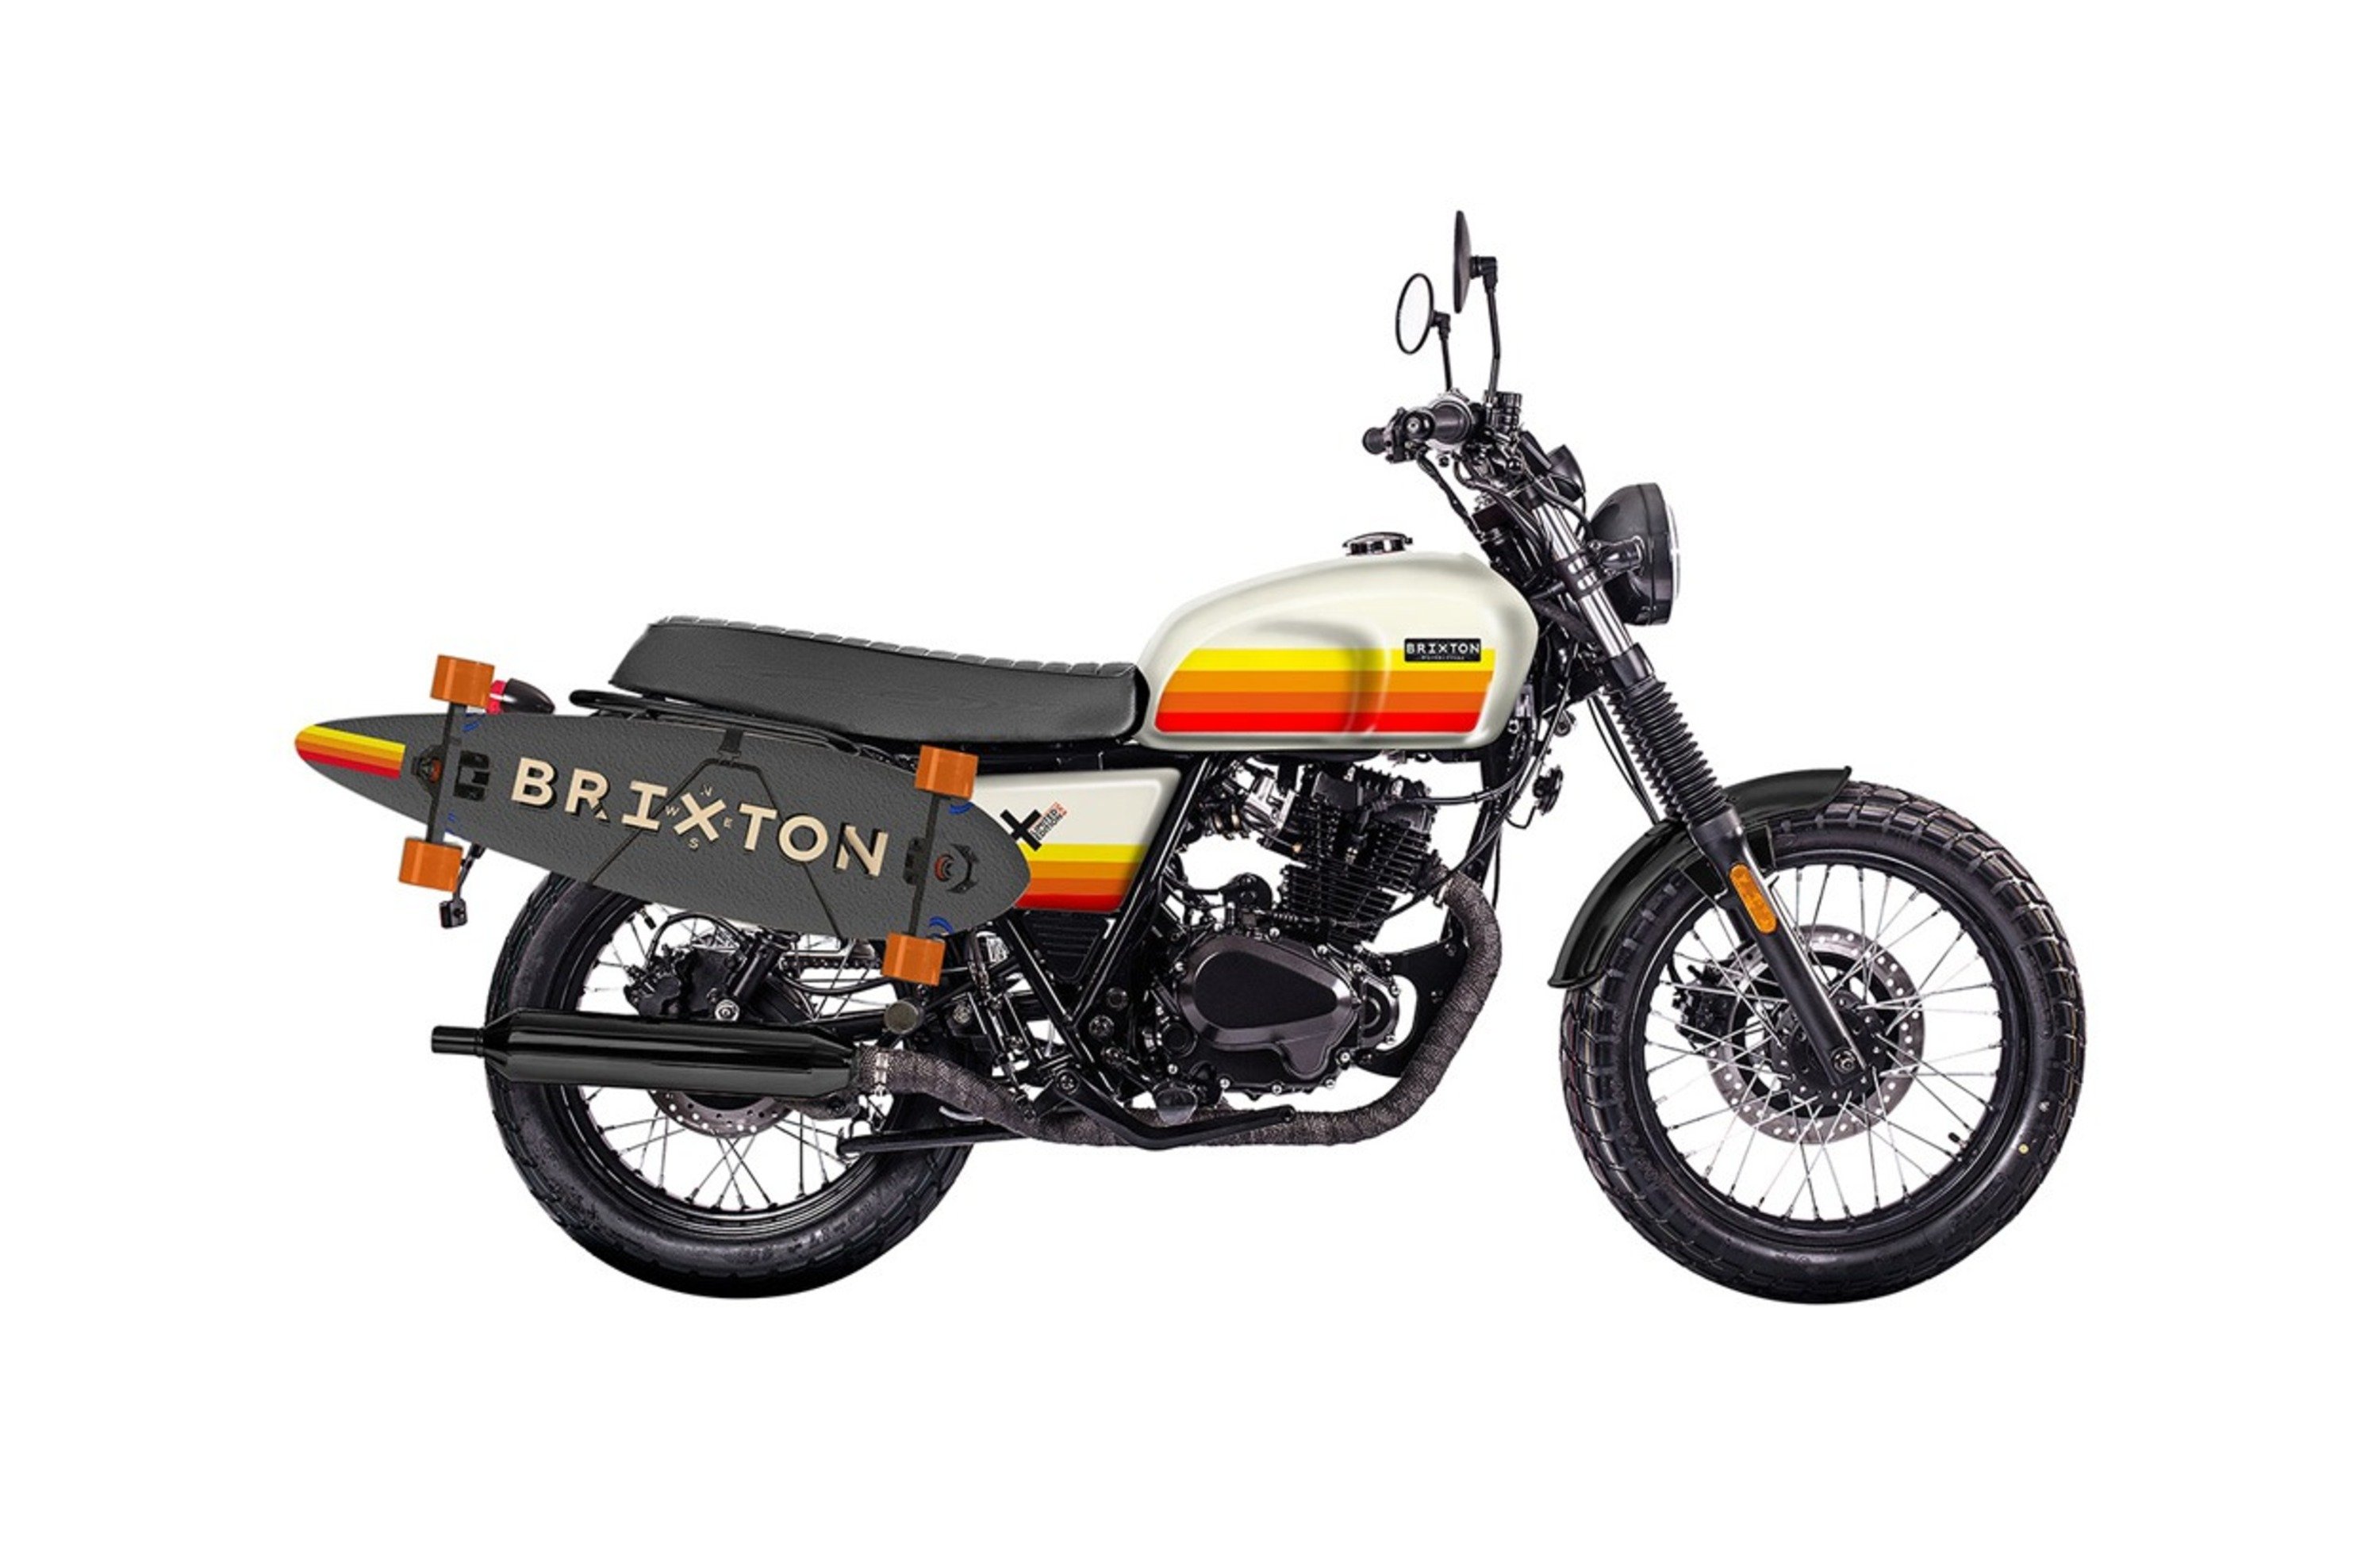 Brixton Motorcycles SK8 SK8 Limited Edition 125 (2020)